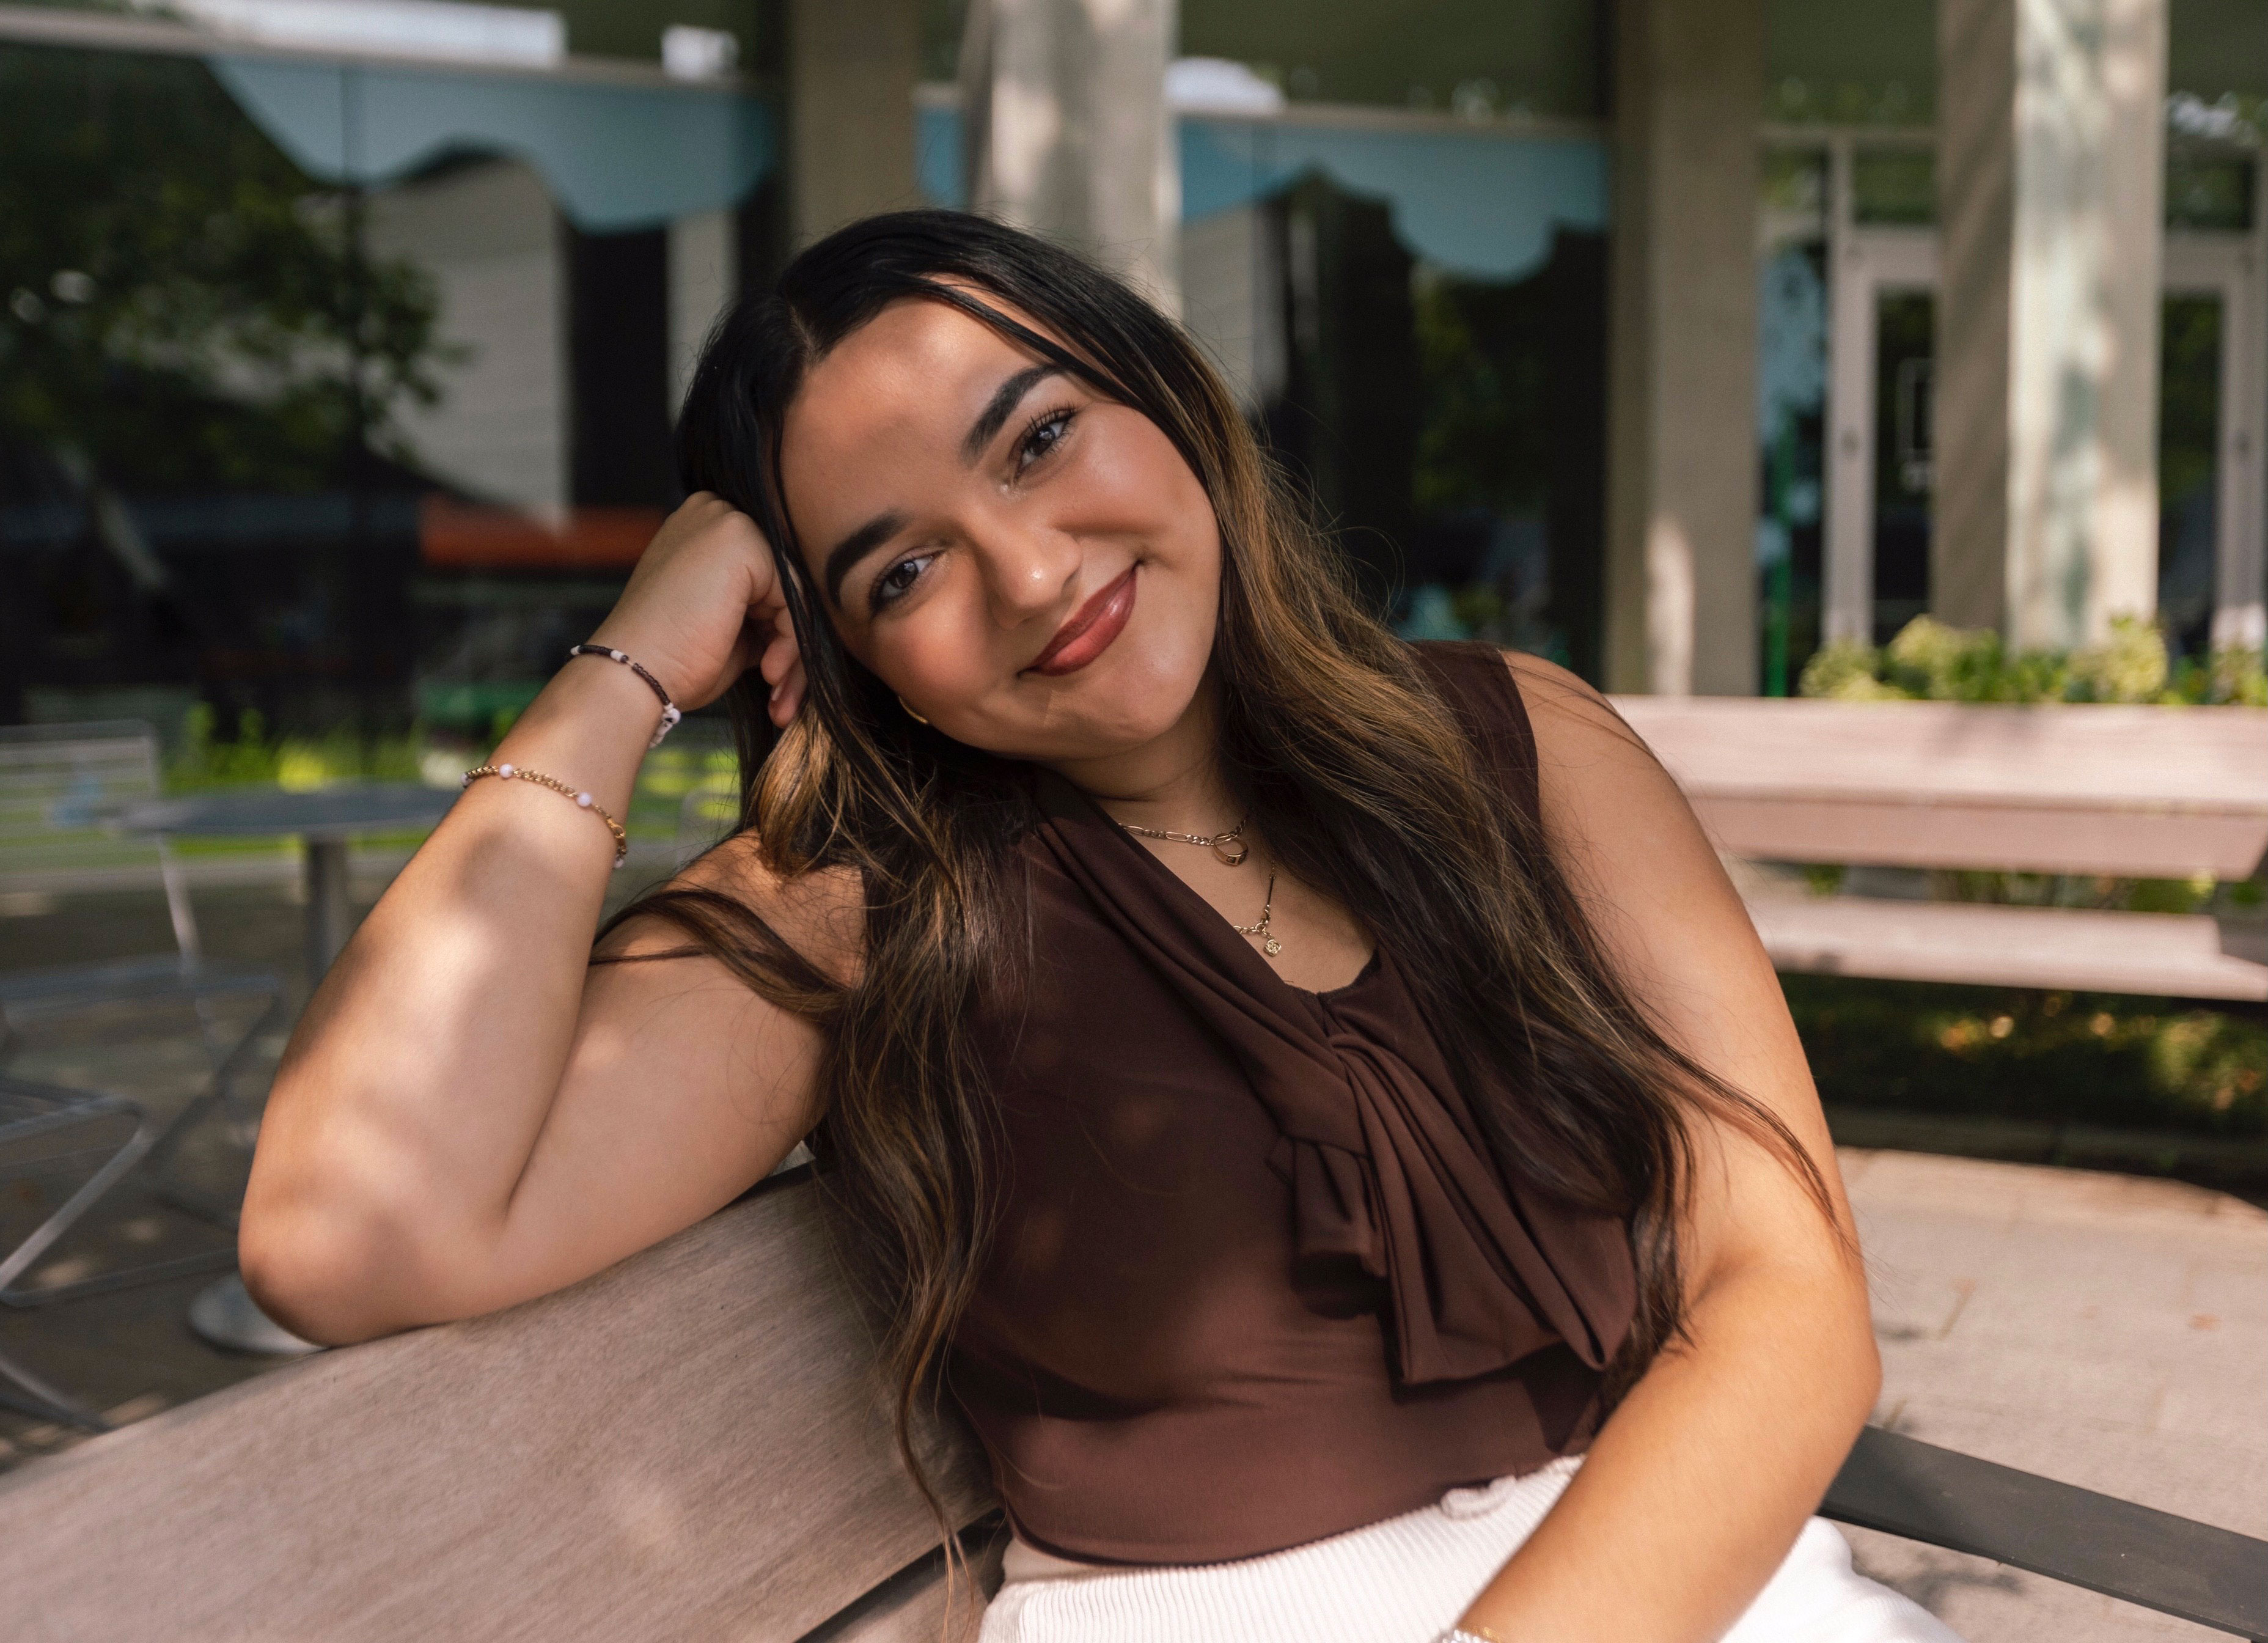 Jasmine Rosa sitting on a bench smiling